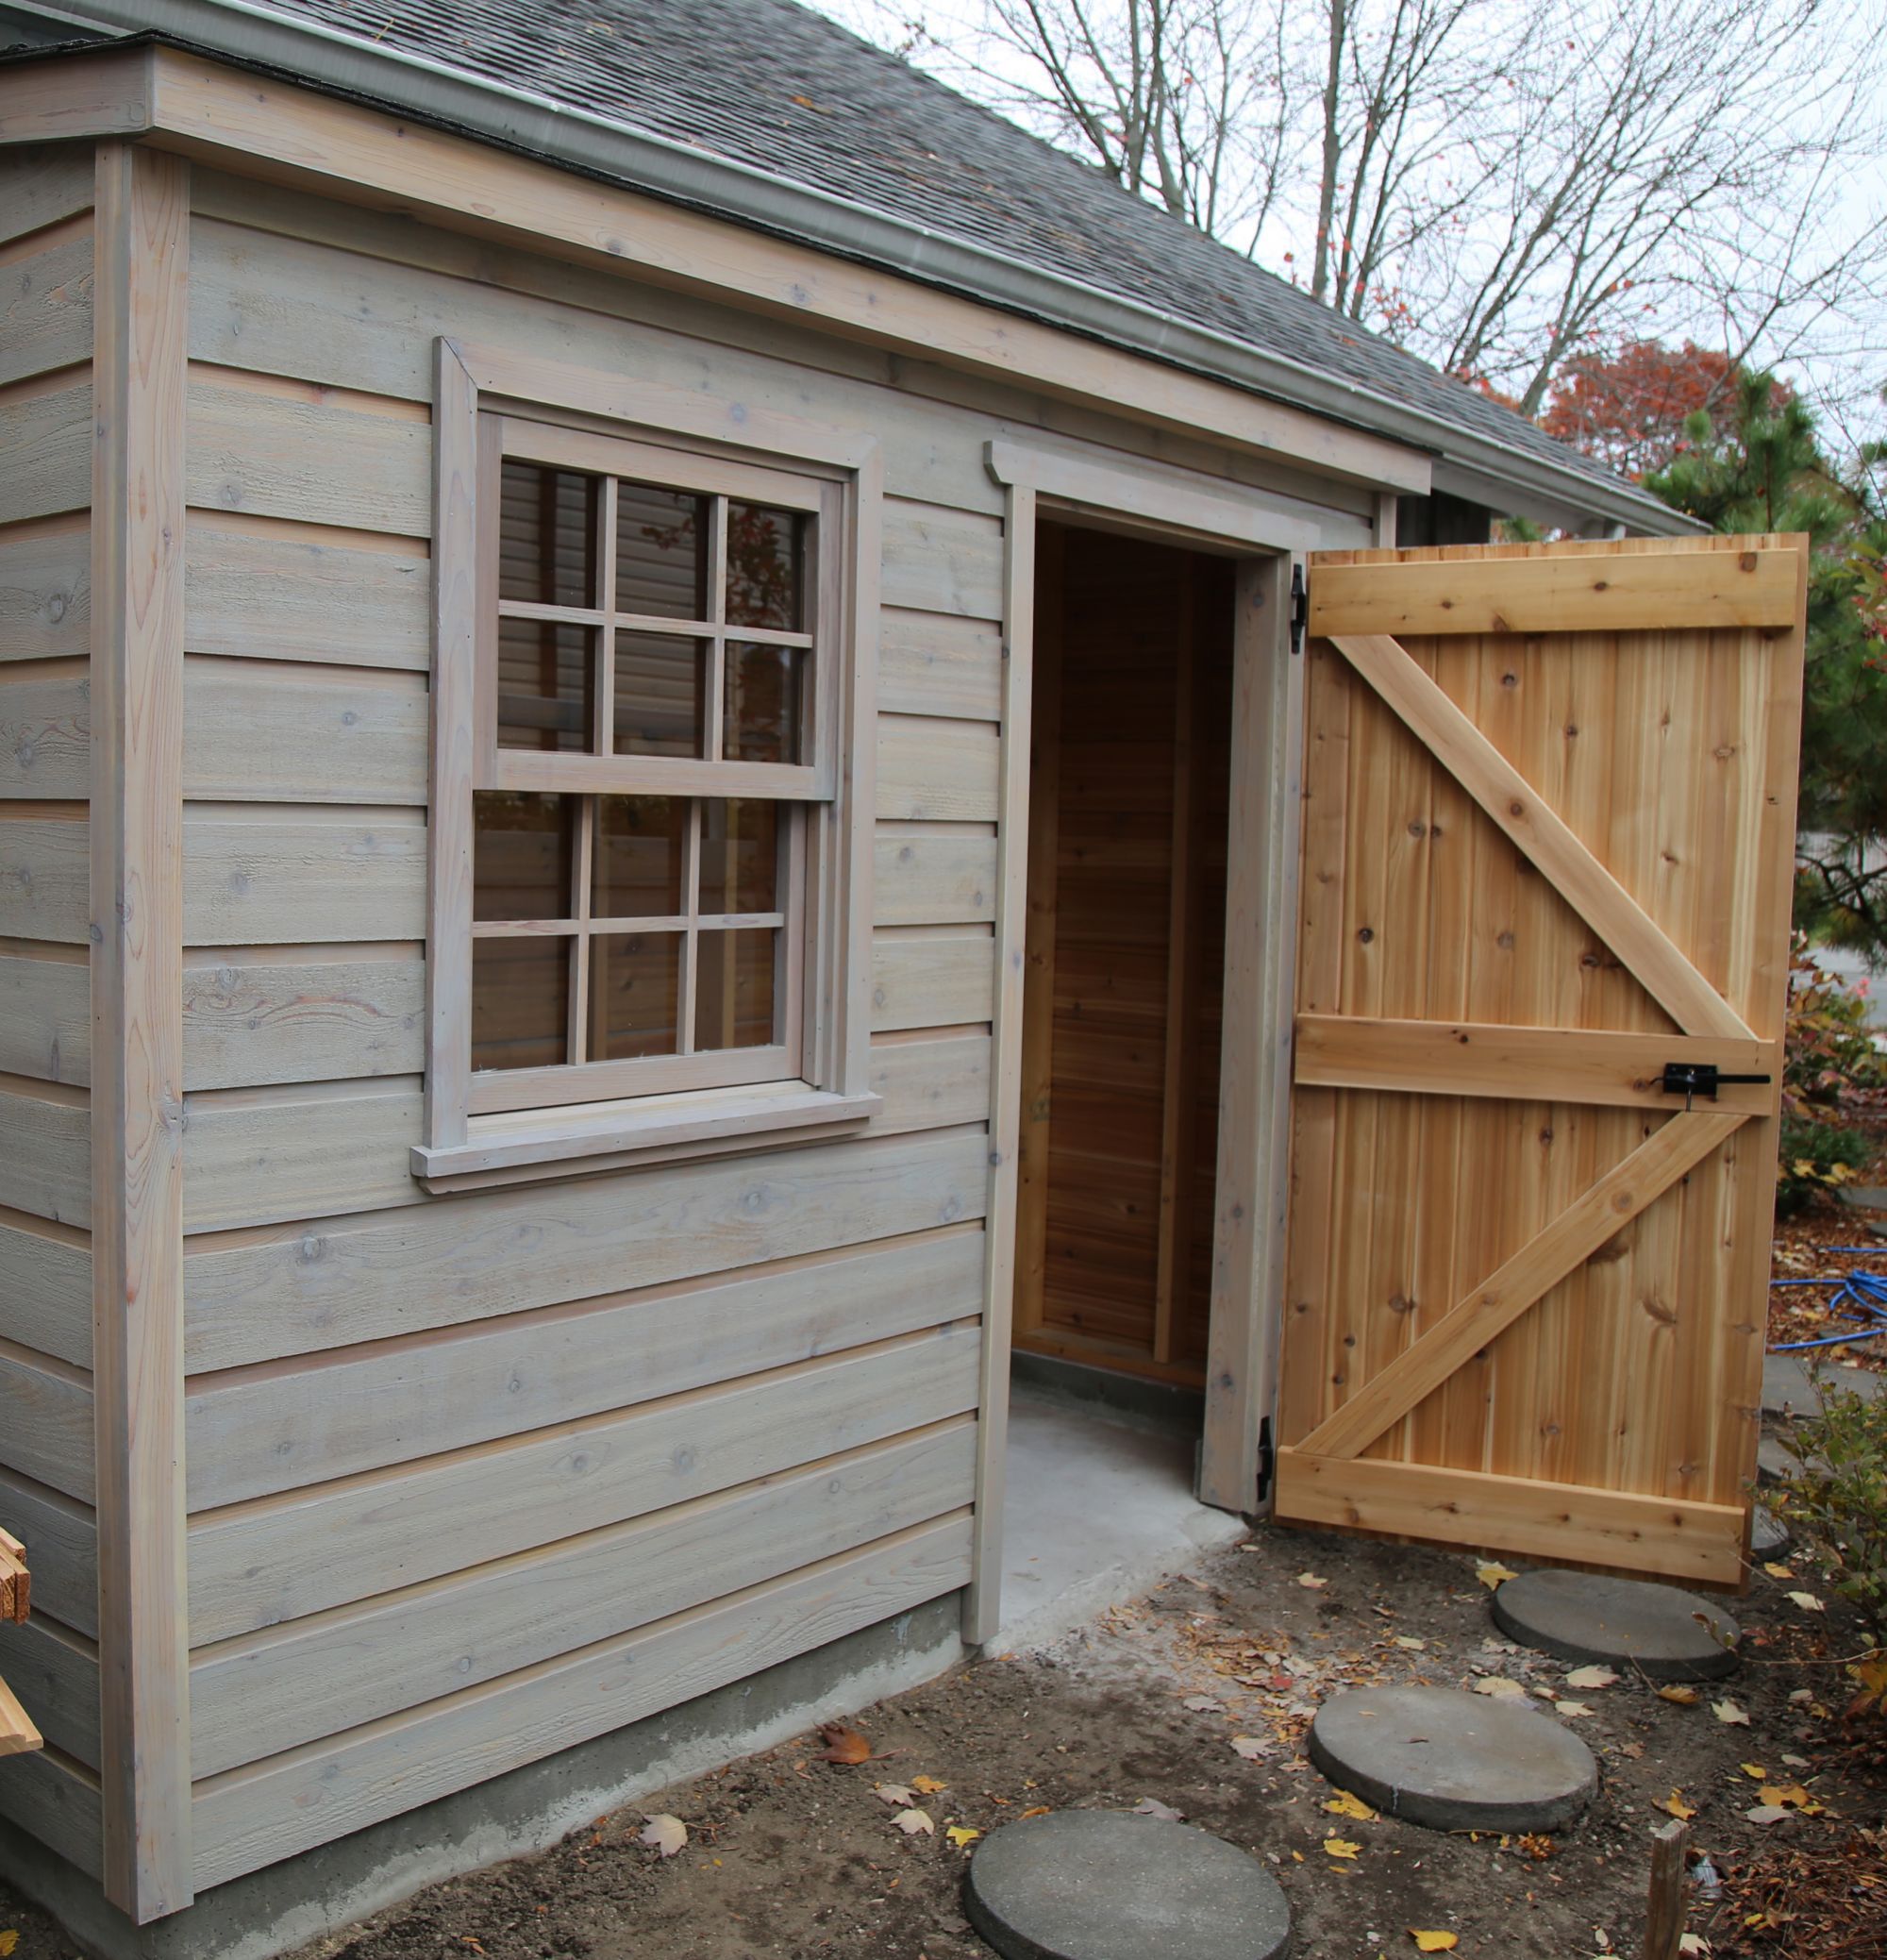 Sarawak garden shed 4x10 with standard single door in Islip, New York. ID number 195923-6.